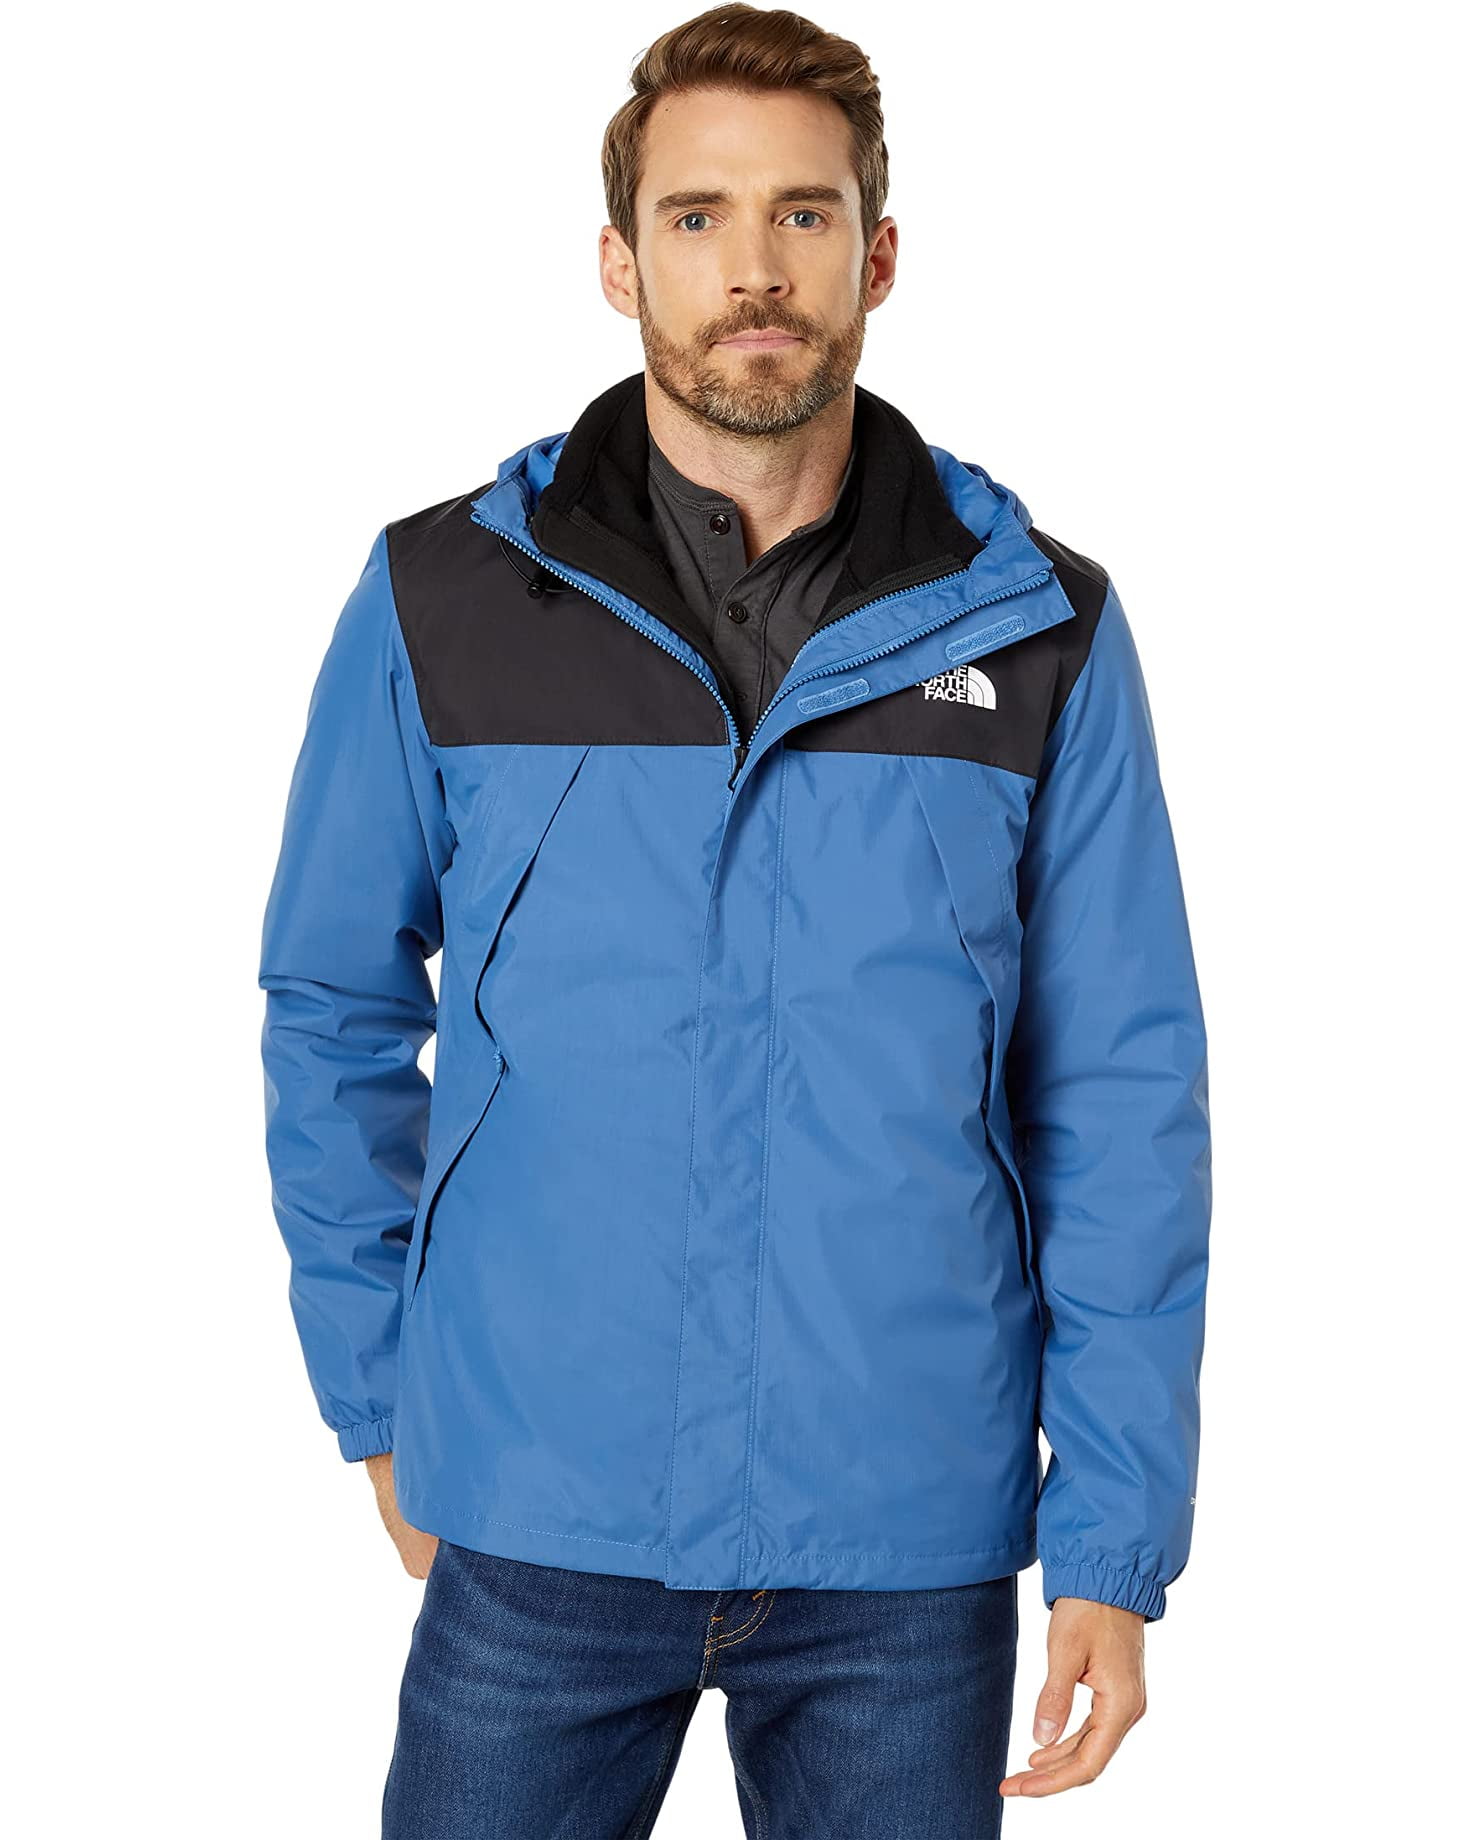 Fokken geduldig verdrietig The North Face Antora Triclimate Jacket - Men's - Walmart.com